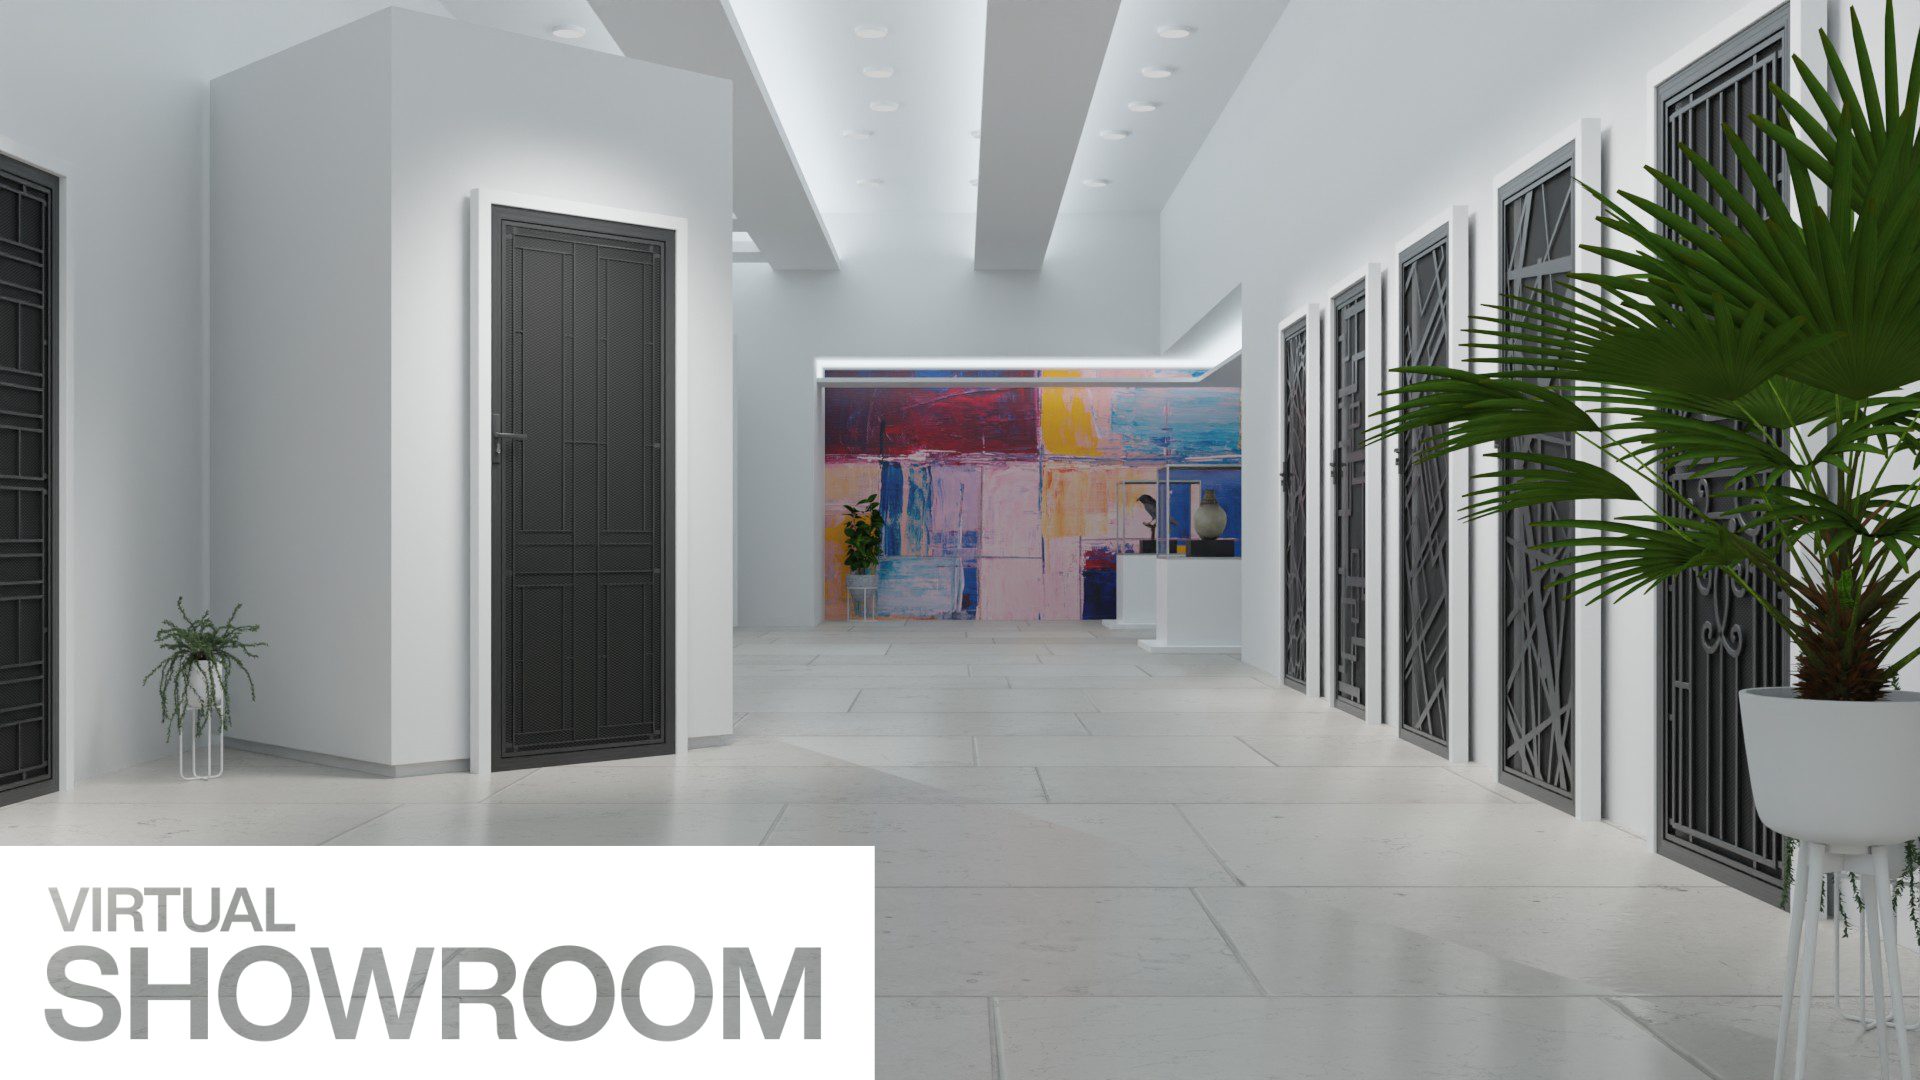 Virtual Showroom Promo shot